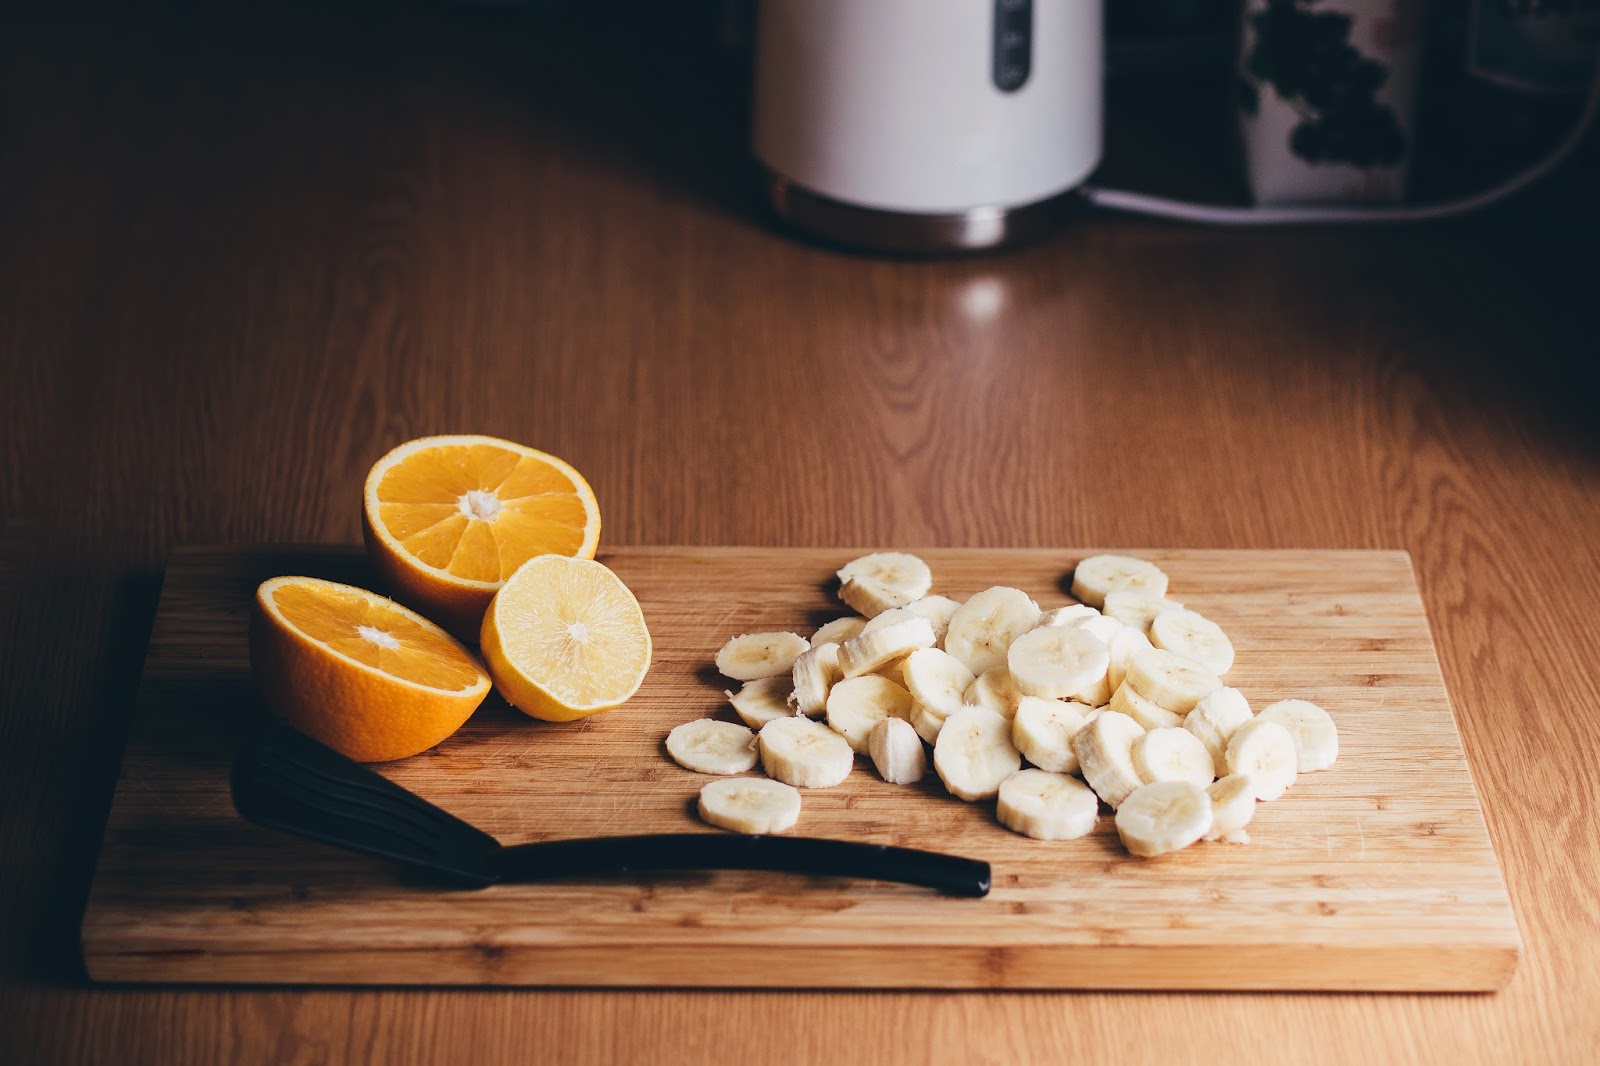 Banana and oranges representing healthy eating 